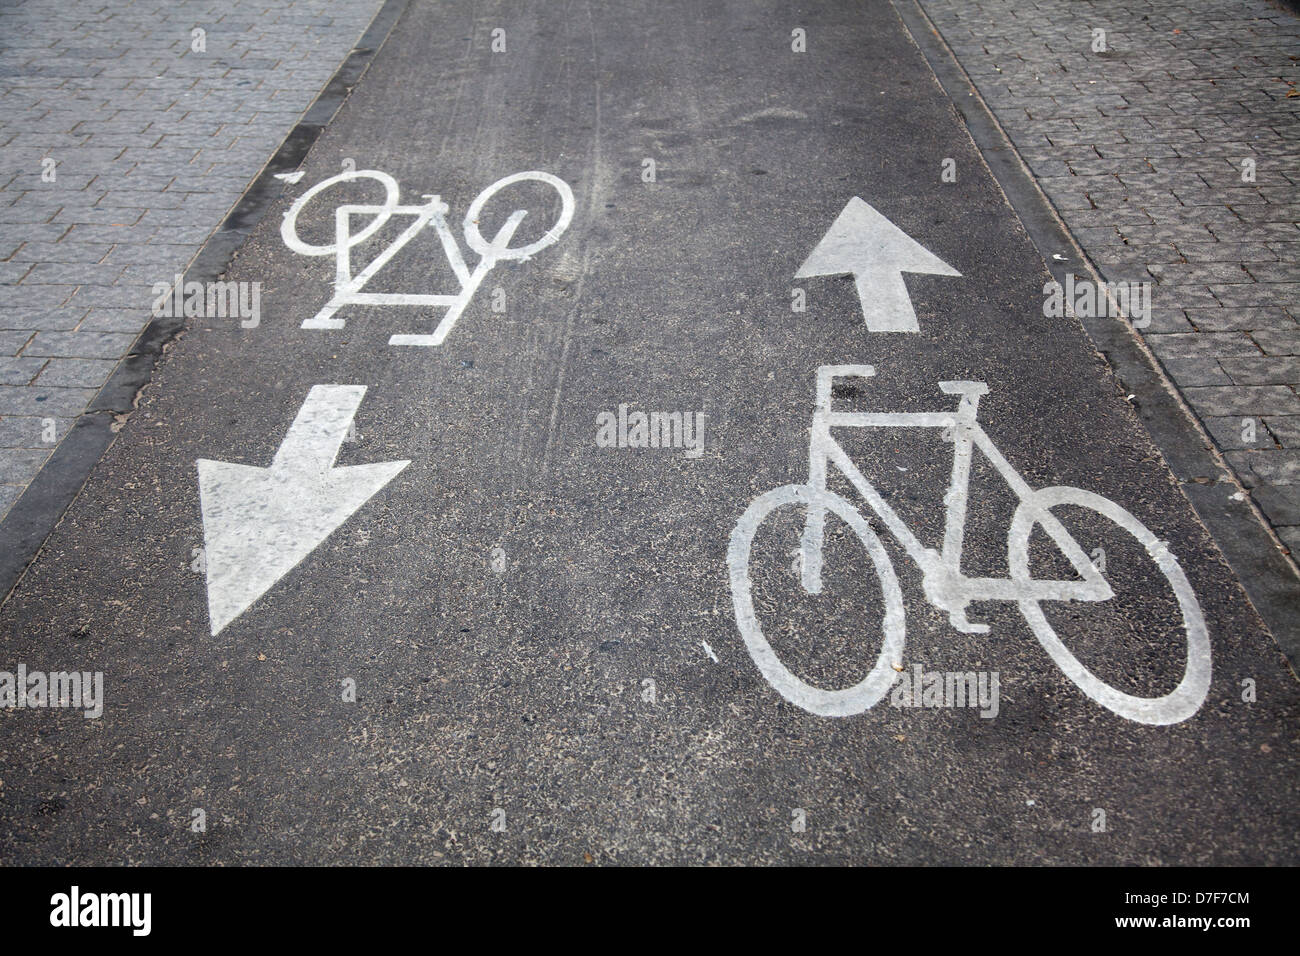 Road marking indicating a bicyle lane. Shot in Tel-Aviv, Israel. Stock Photo